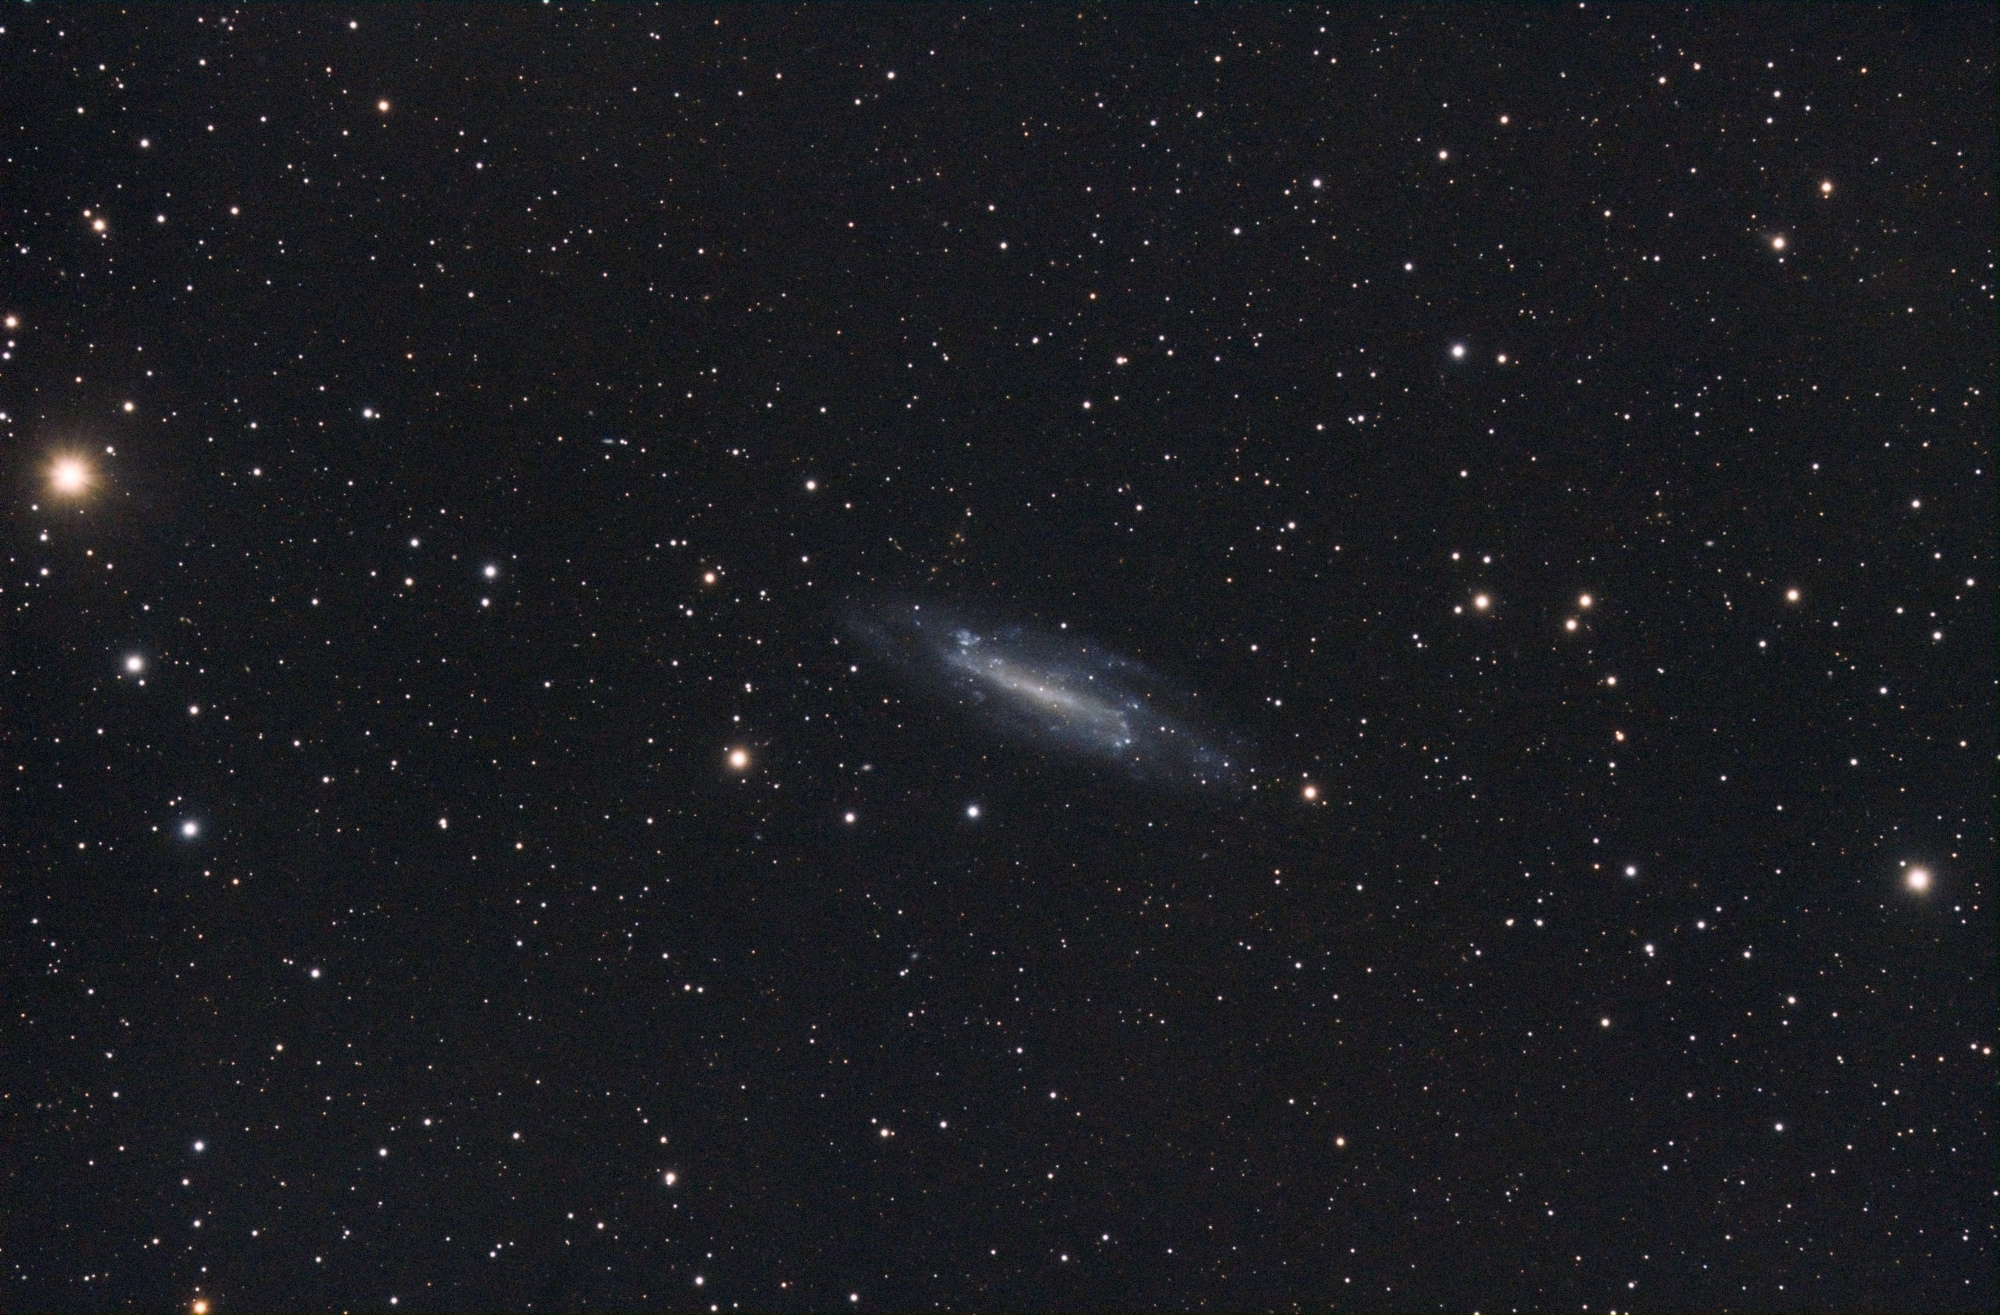 NGC_4236_SIRIL-1-iris-cs5-4-FINAL-2-x.jpg